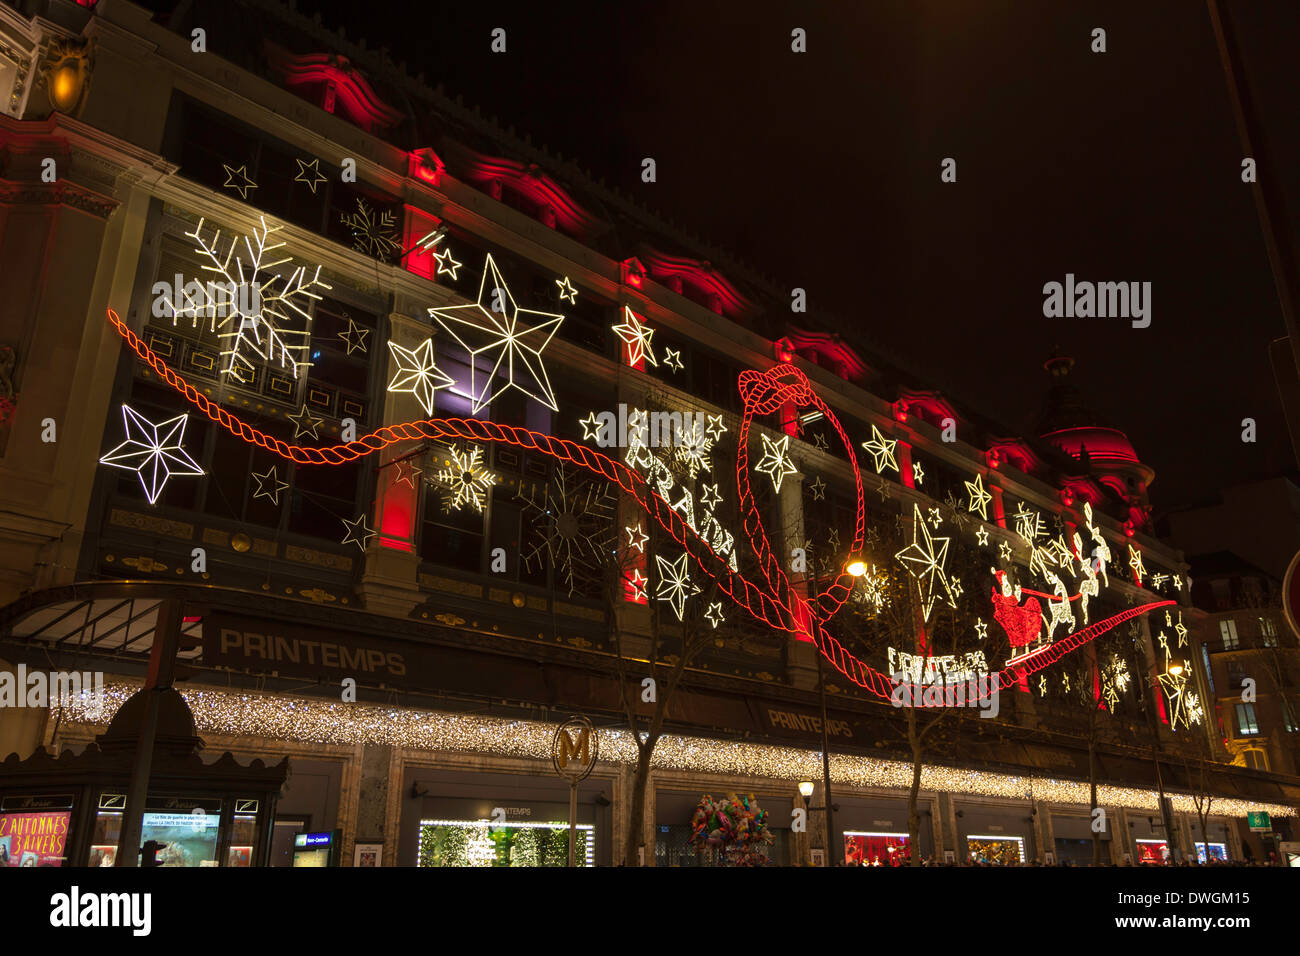 Christmas lights on the exterior of Au Printemps department store, Paris, France Stock Photo